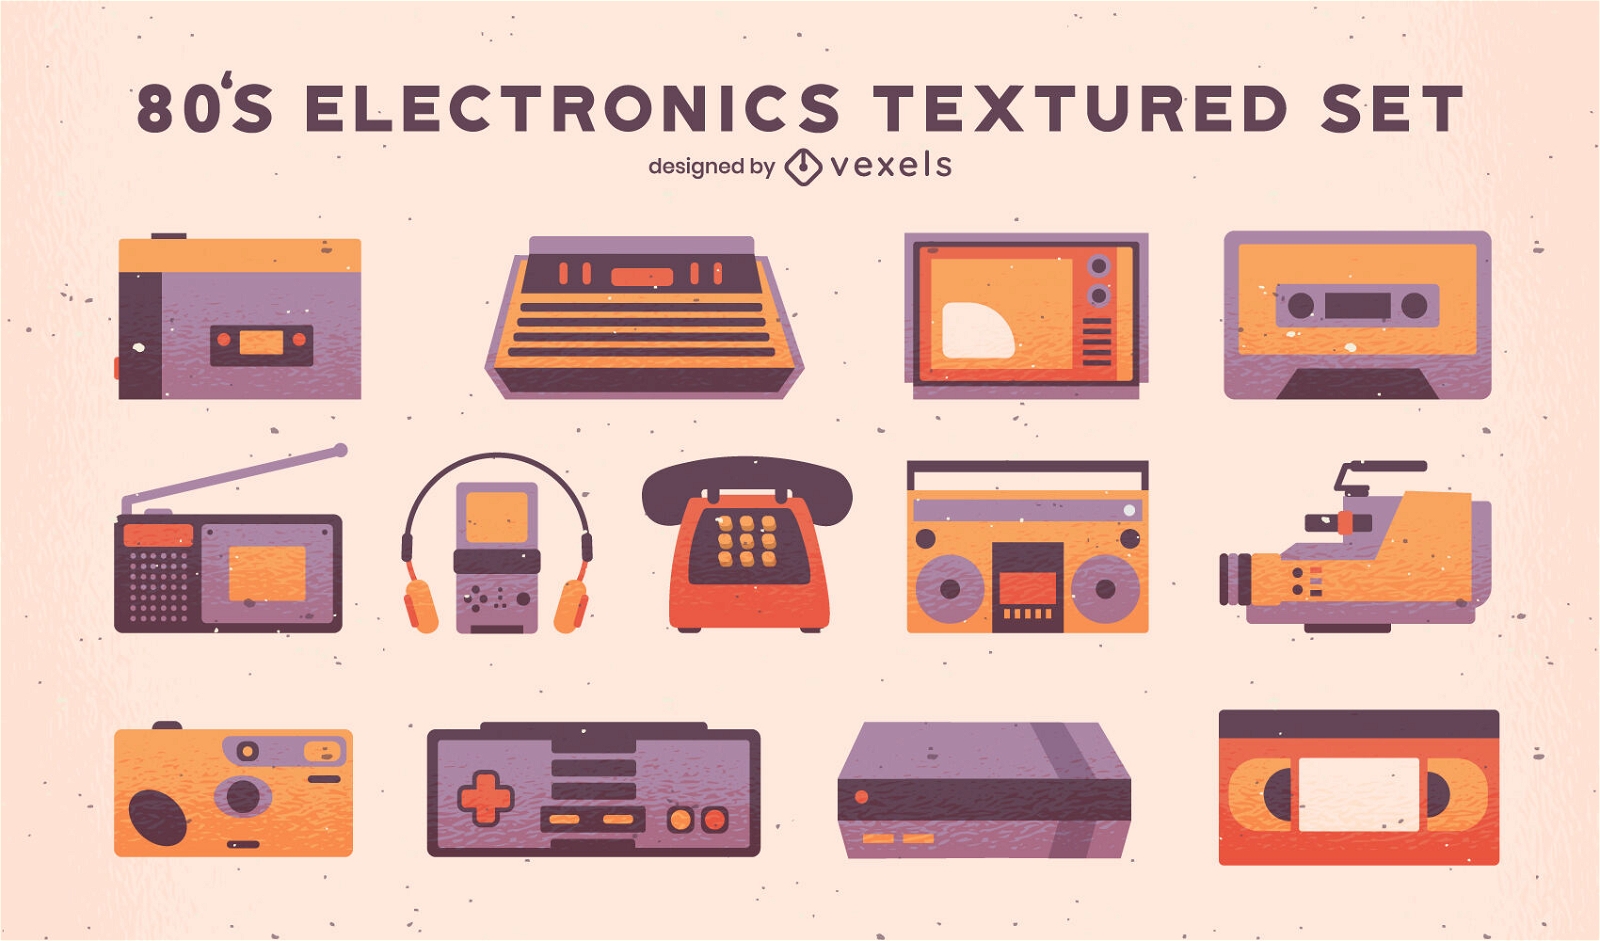 Elementos retro tecnológicos texturizados dos anos 80